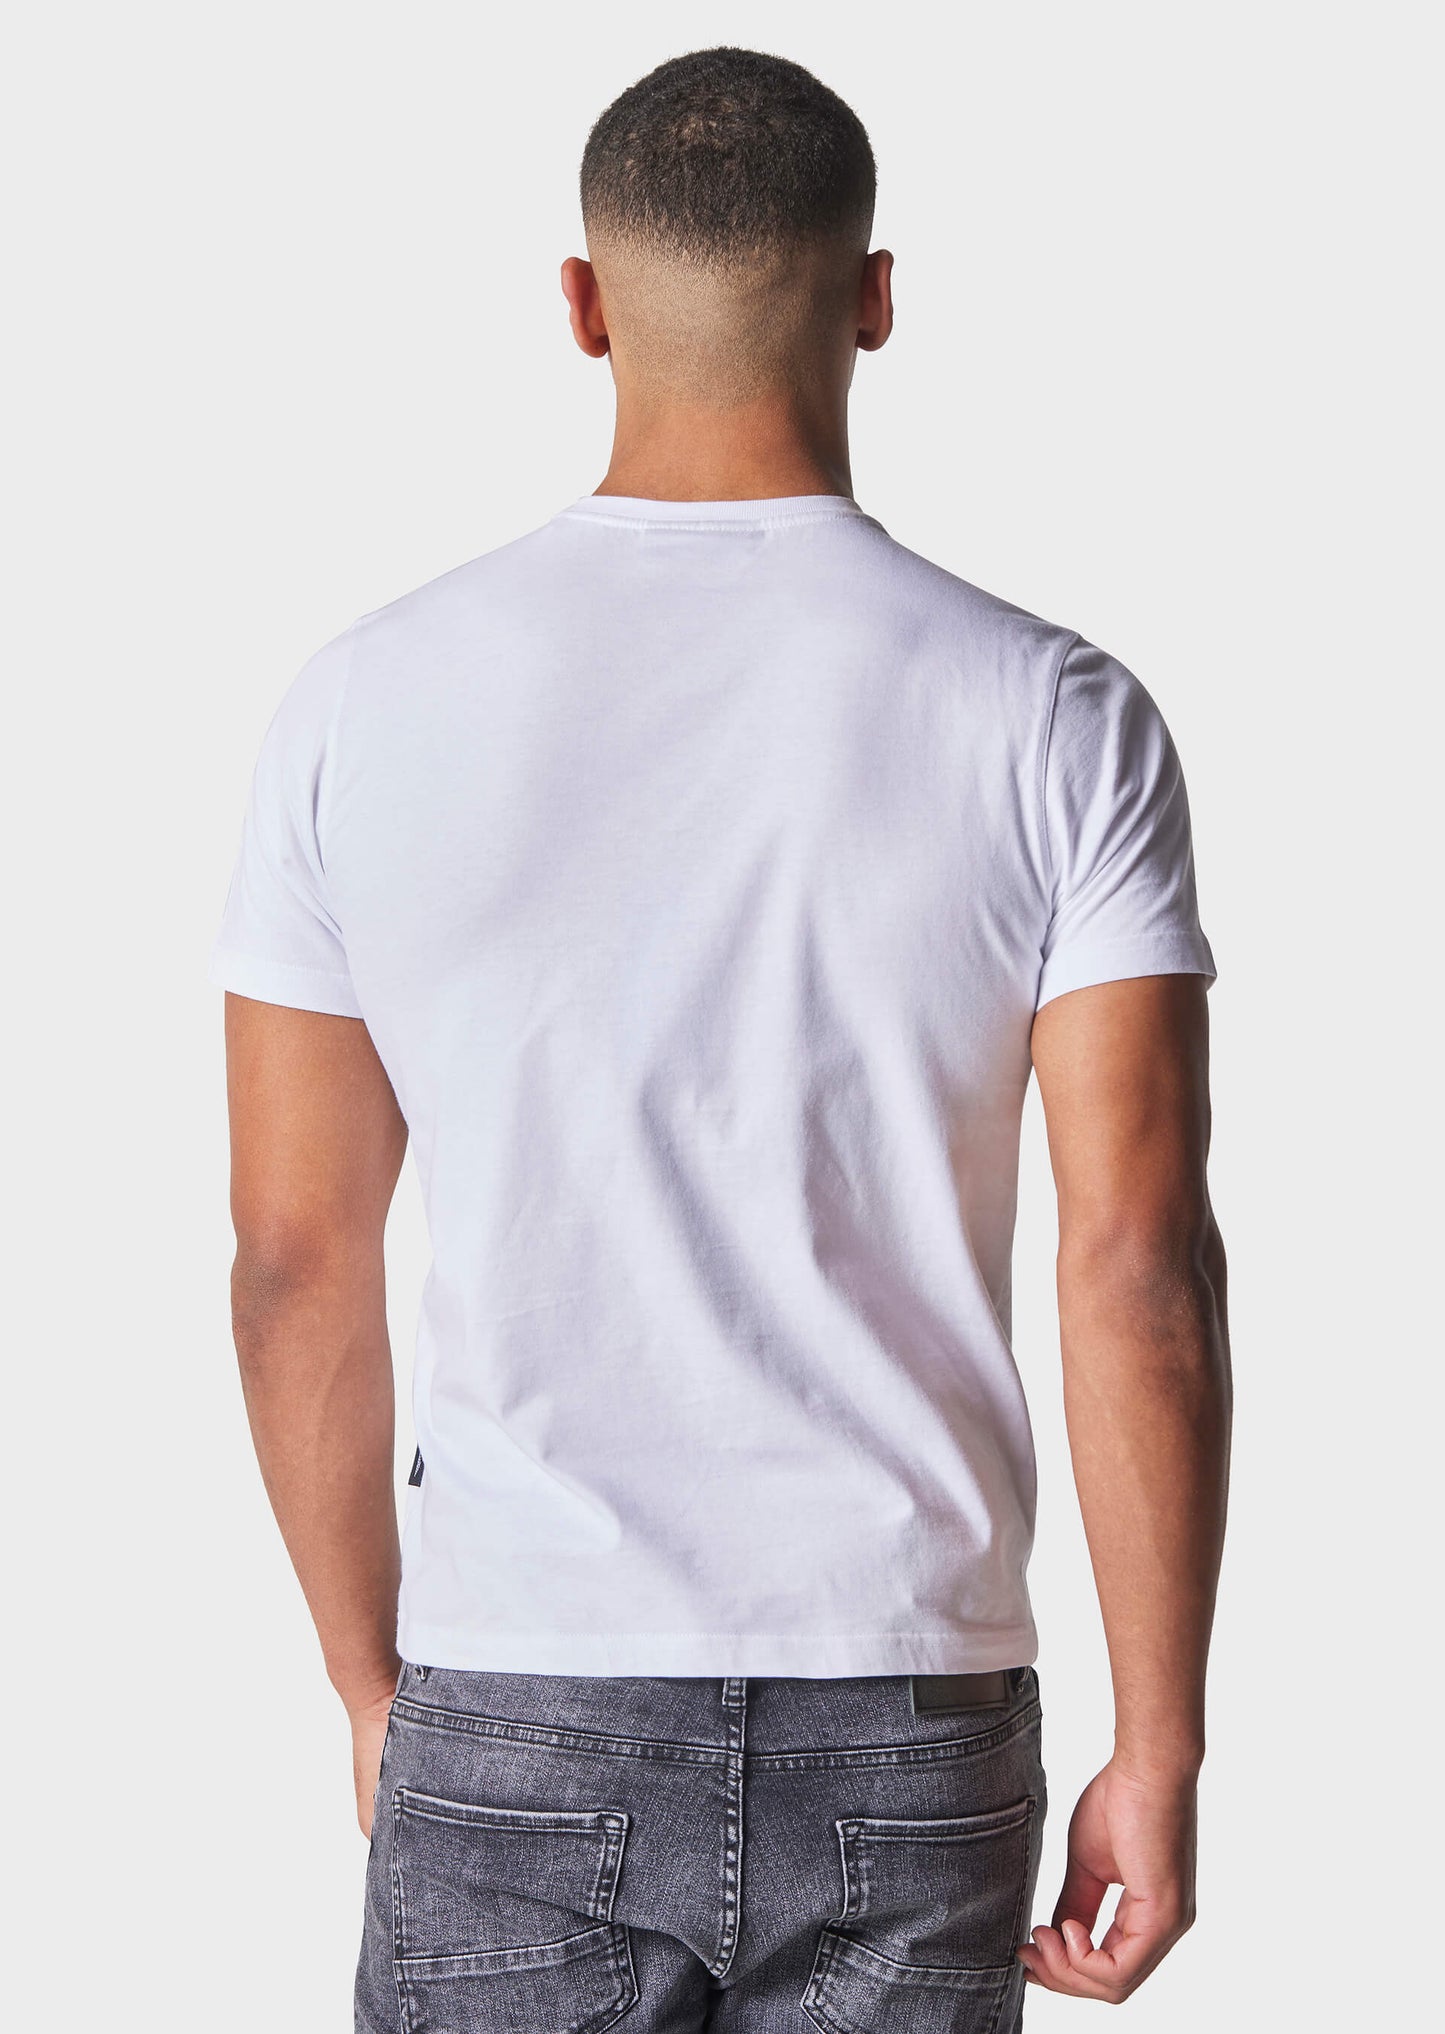 Mulloy White T-Shirt